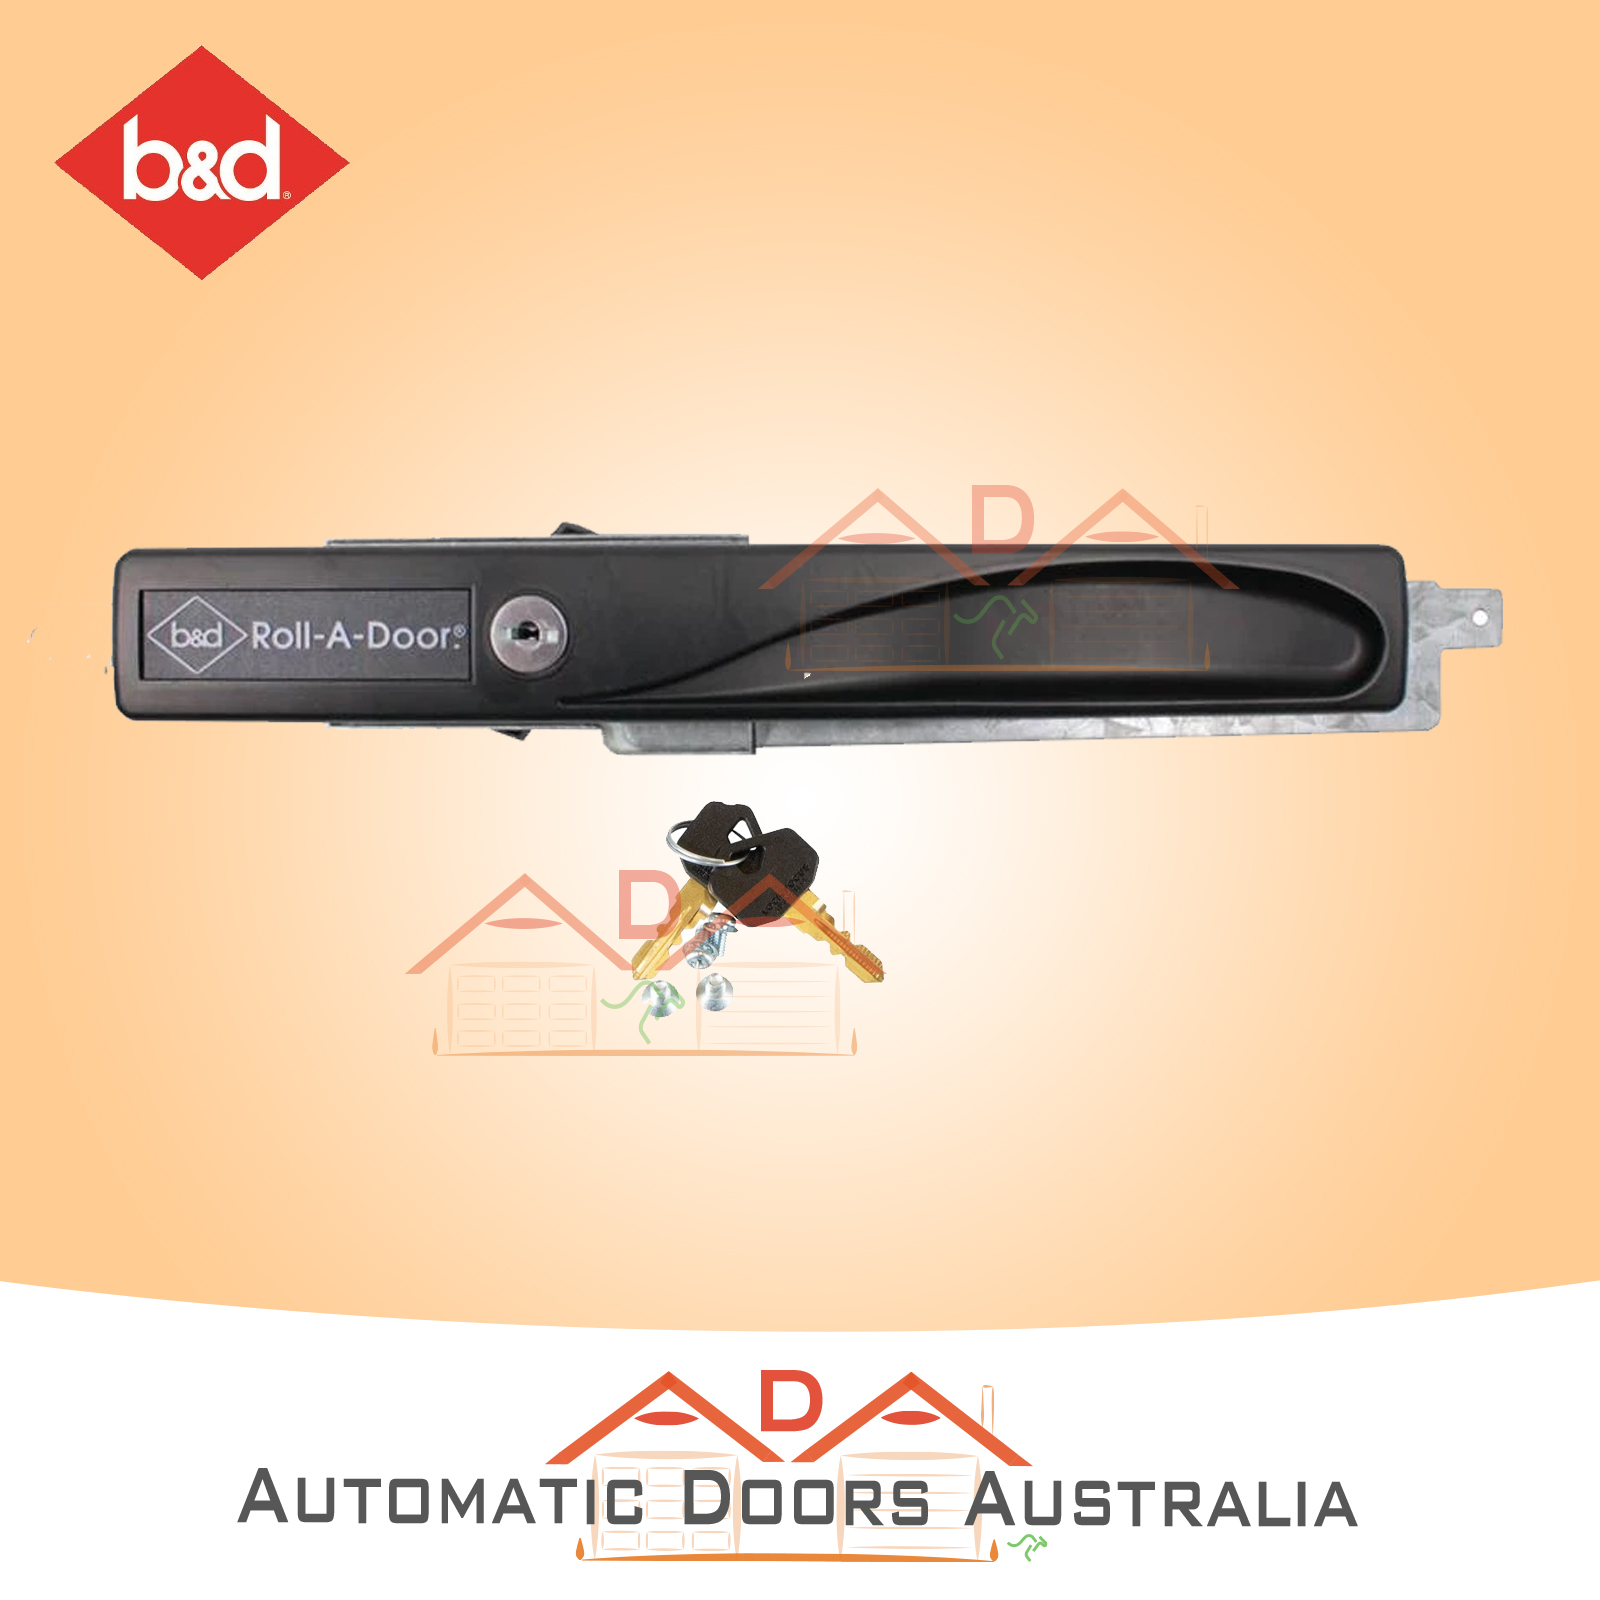 B&D Deluxe Roller Door Lock assembly kit with 2 keys BD 9052